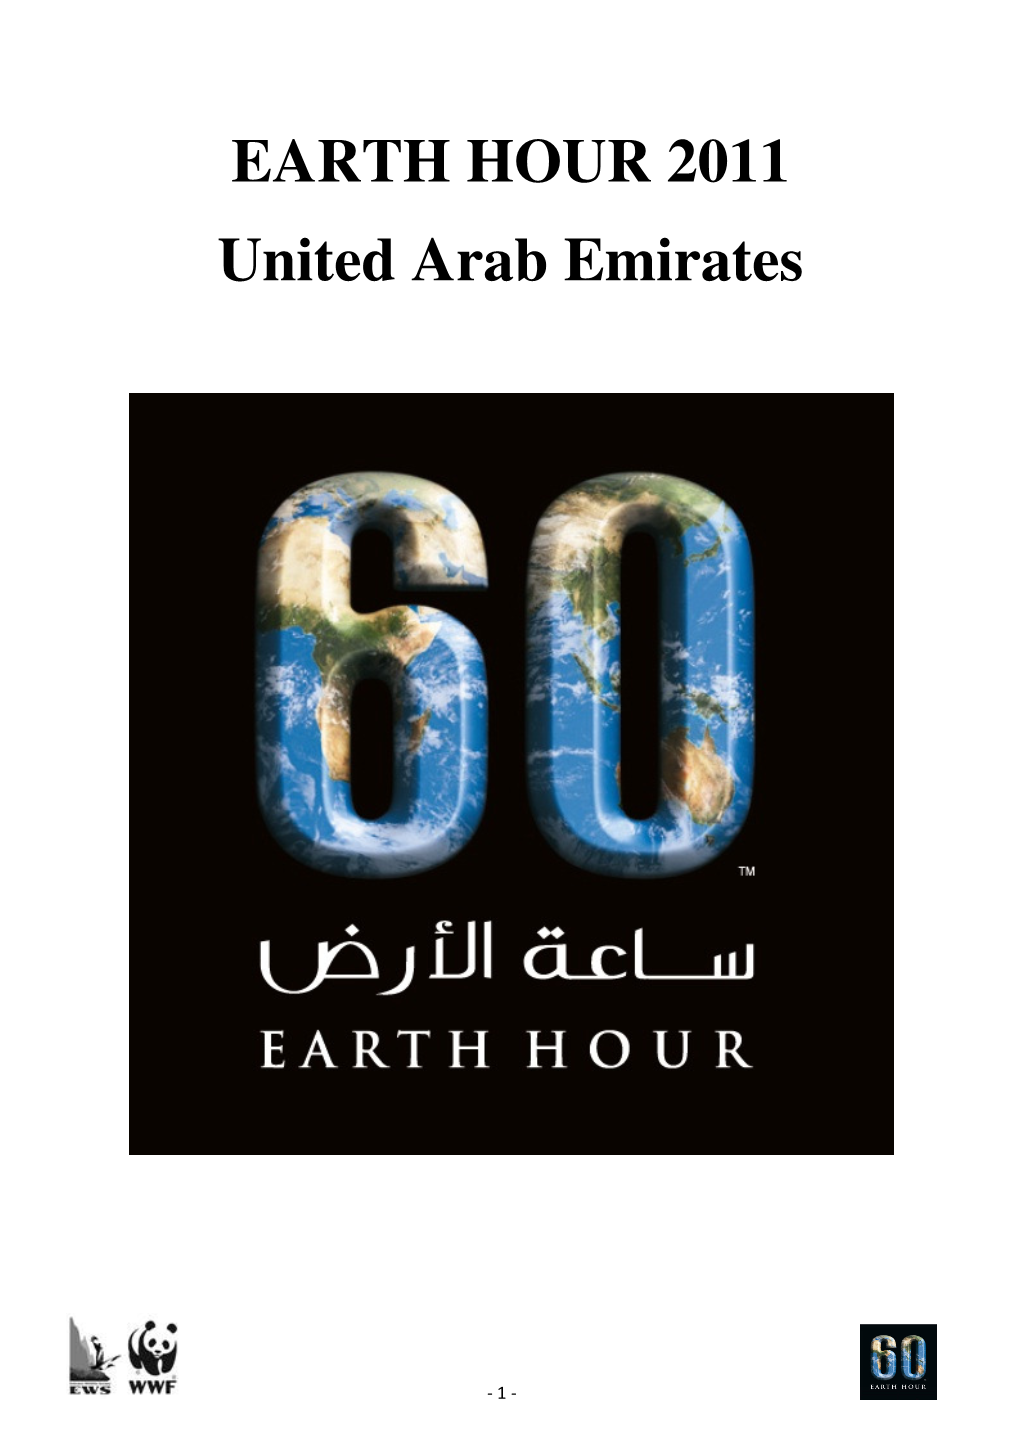 EARTH HOUR 2011 United Arab Emirates